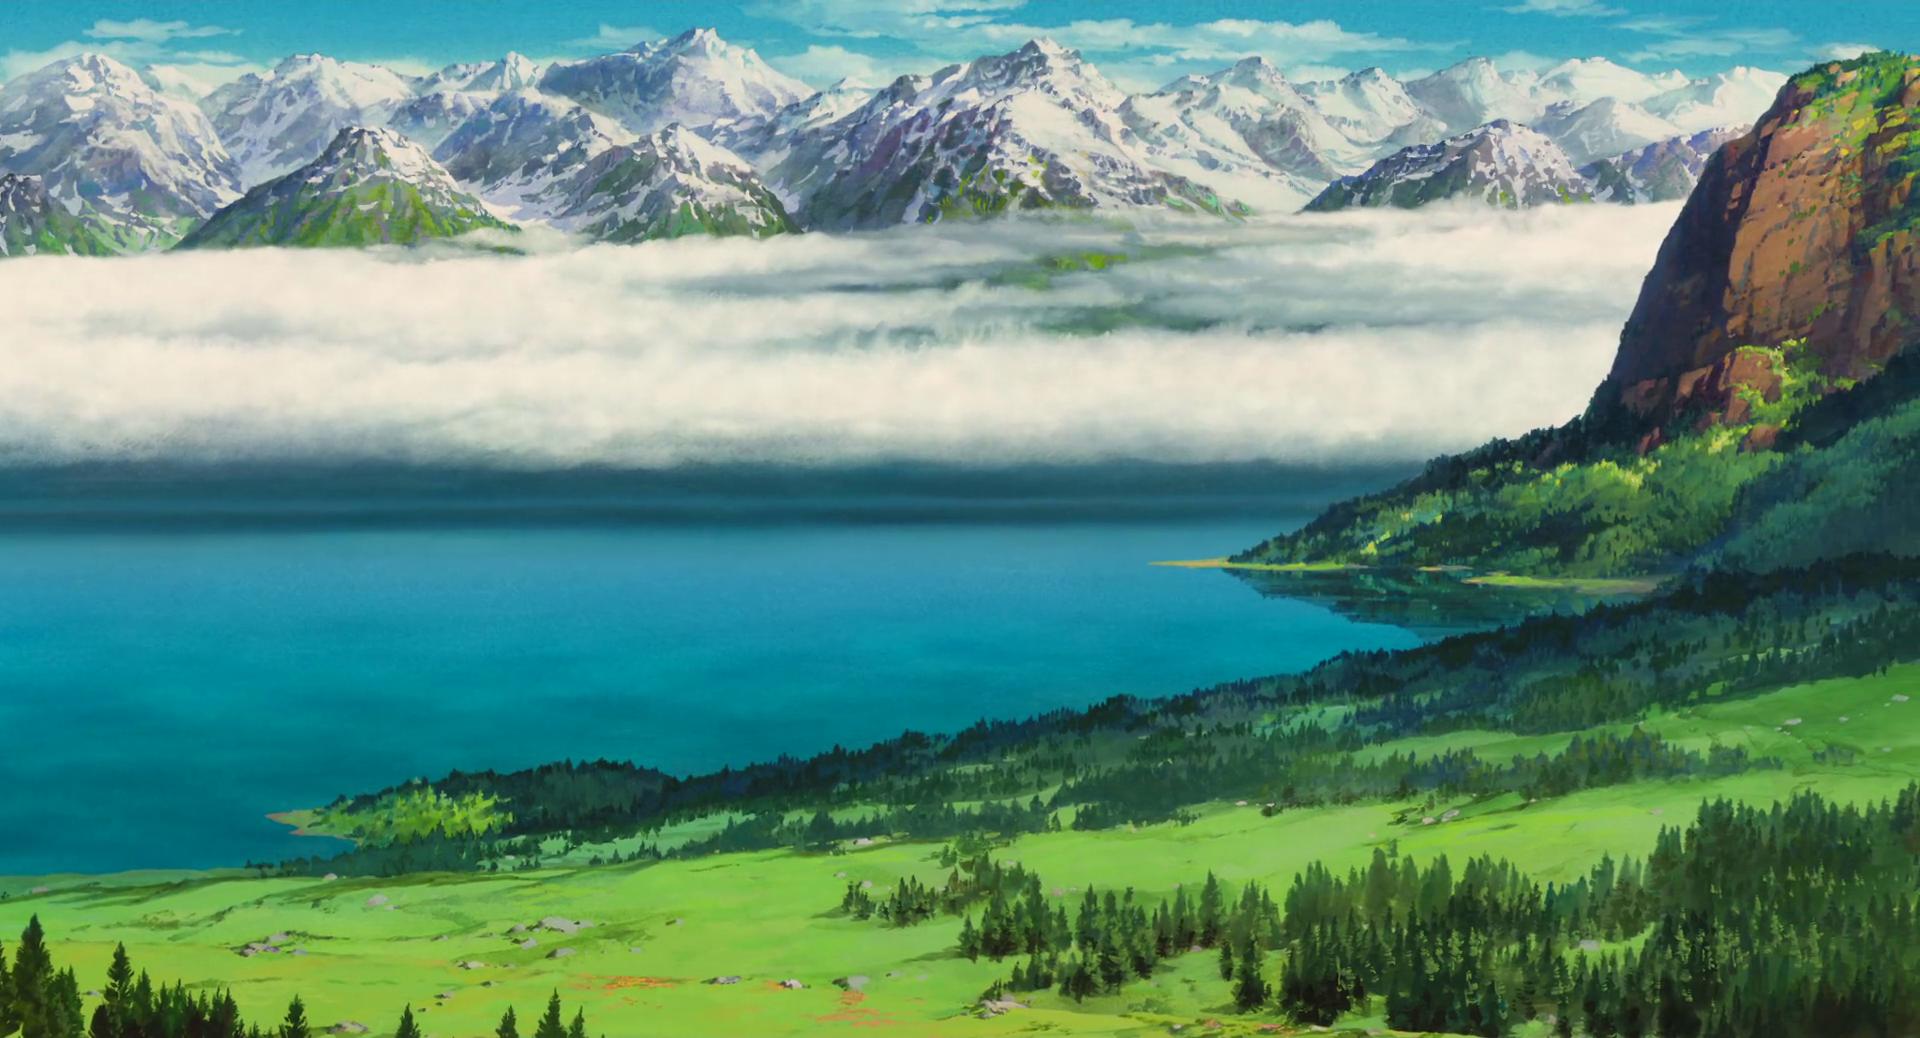 Studio Ghibli Scenic Wallpaper 2020